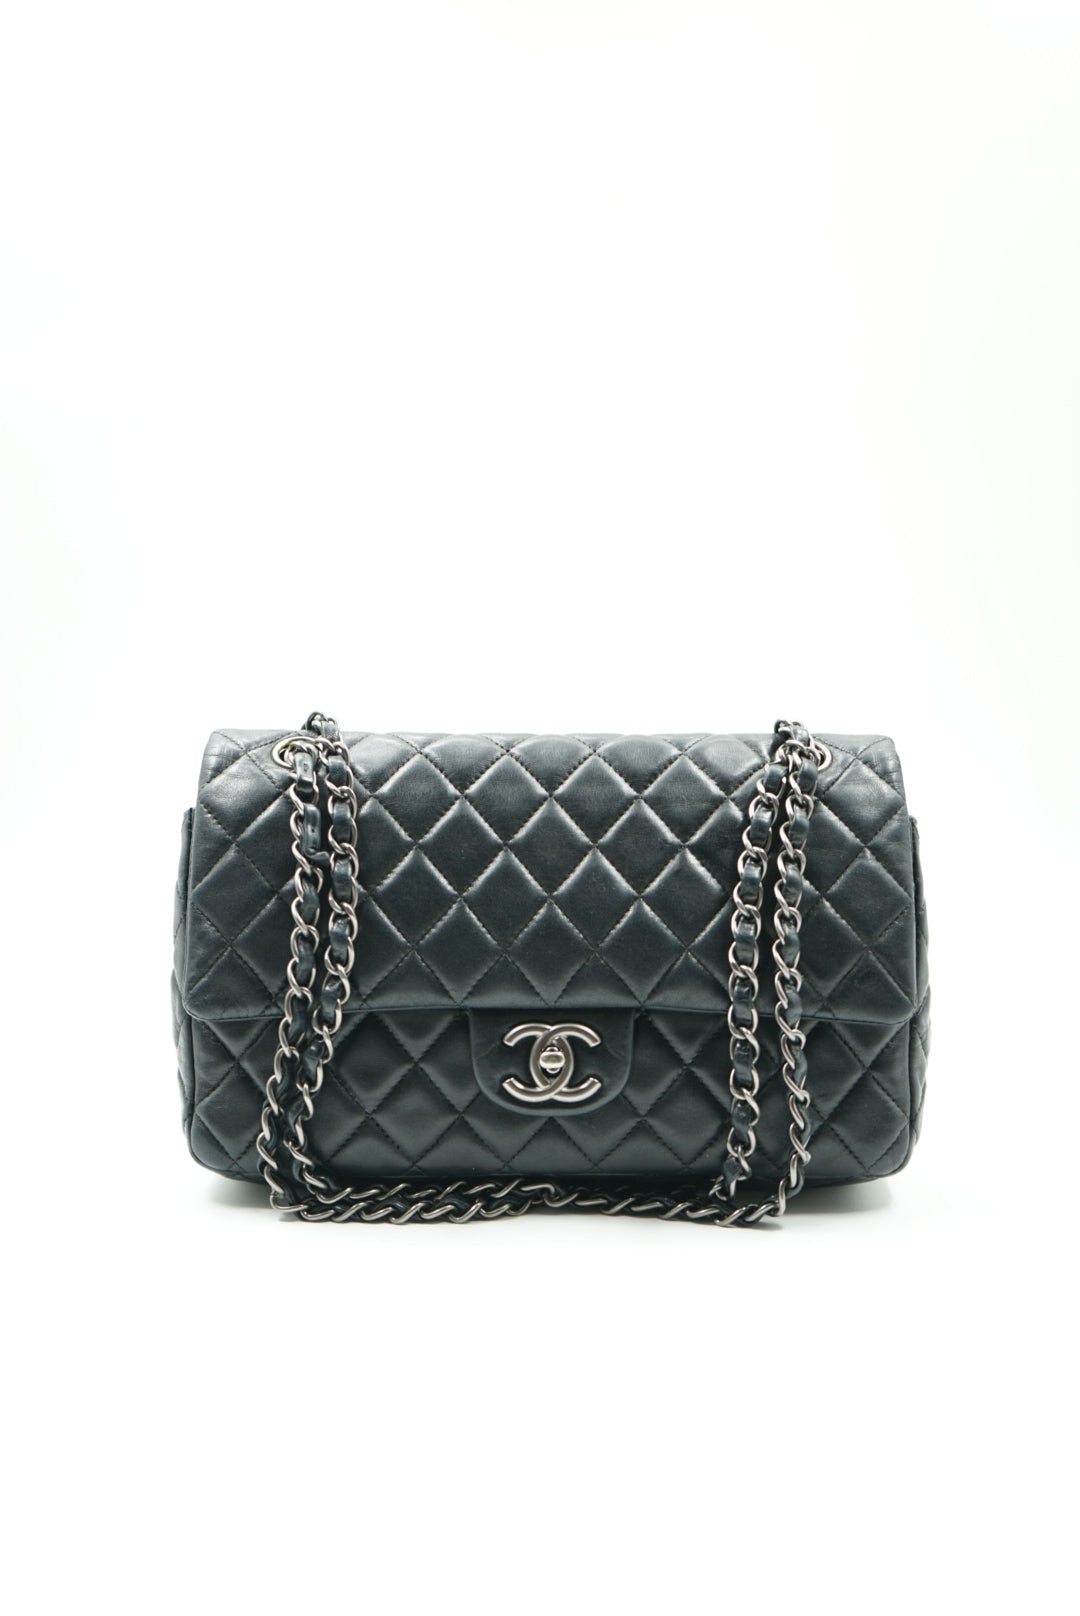 Chanel classic double flap bag SHW